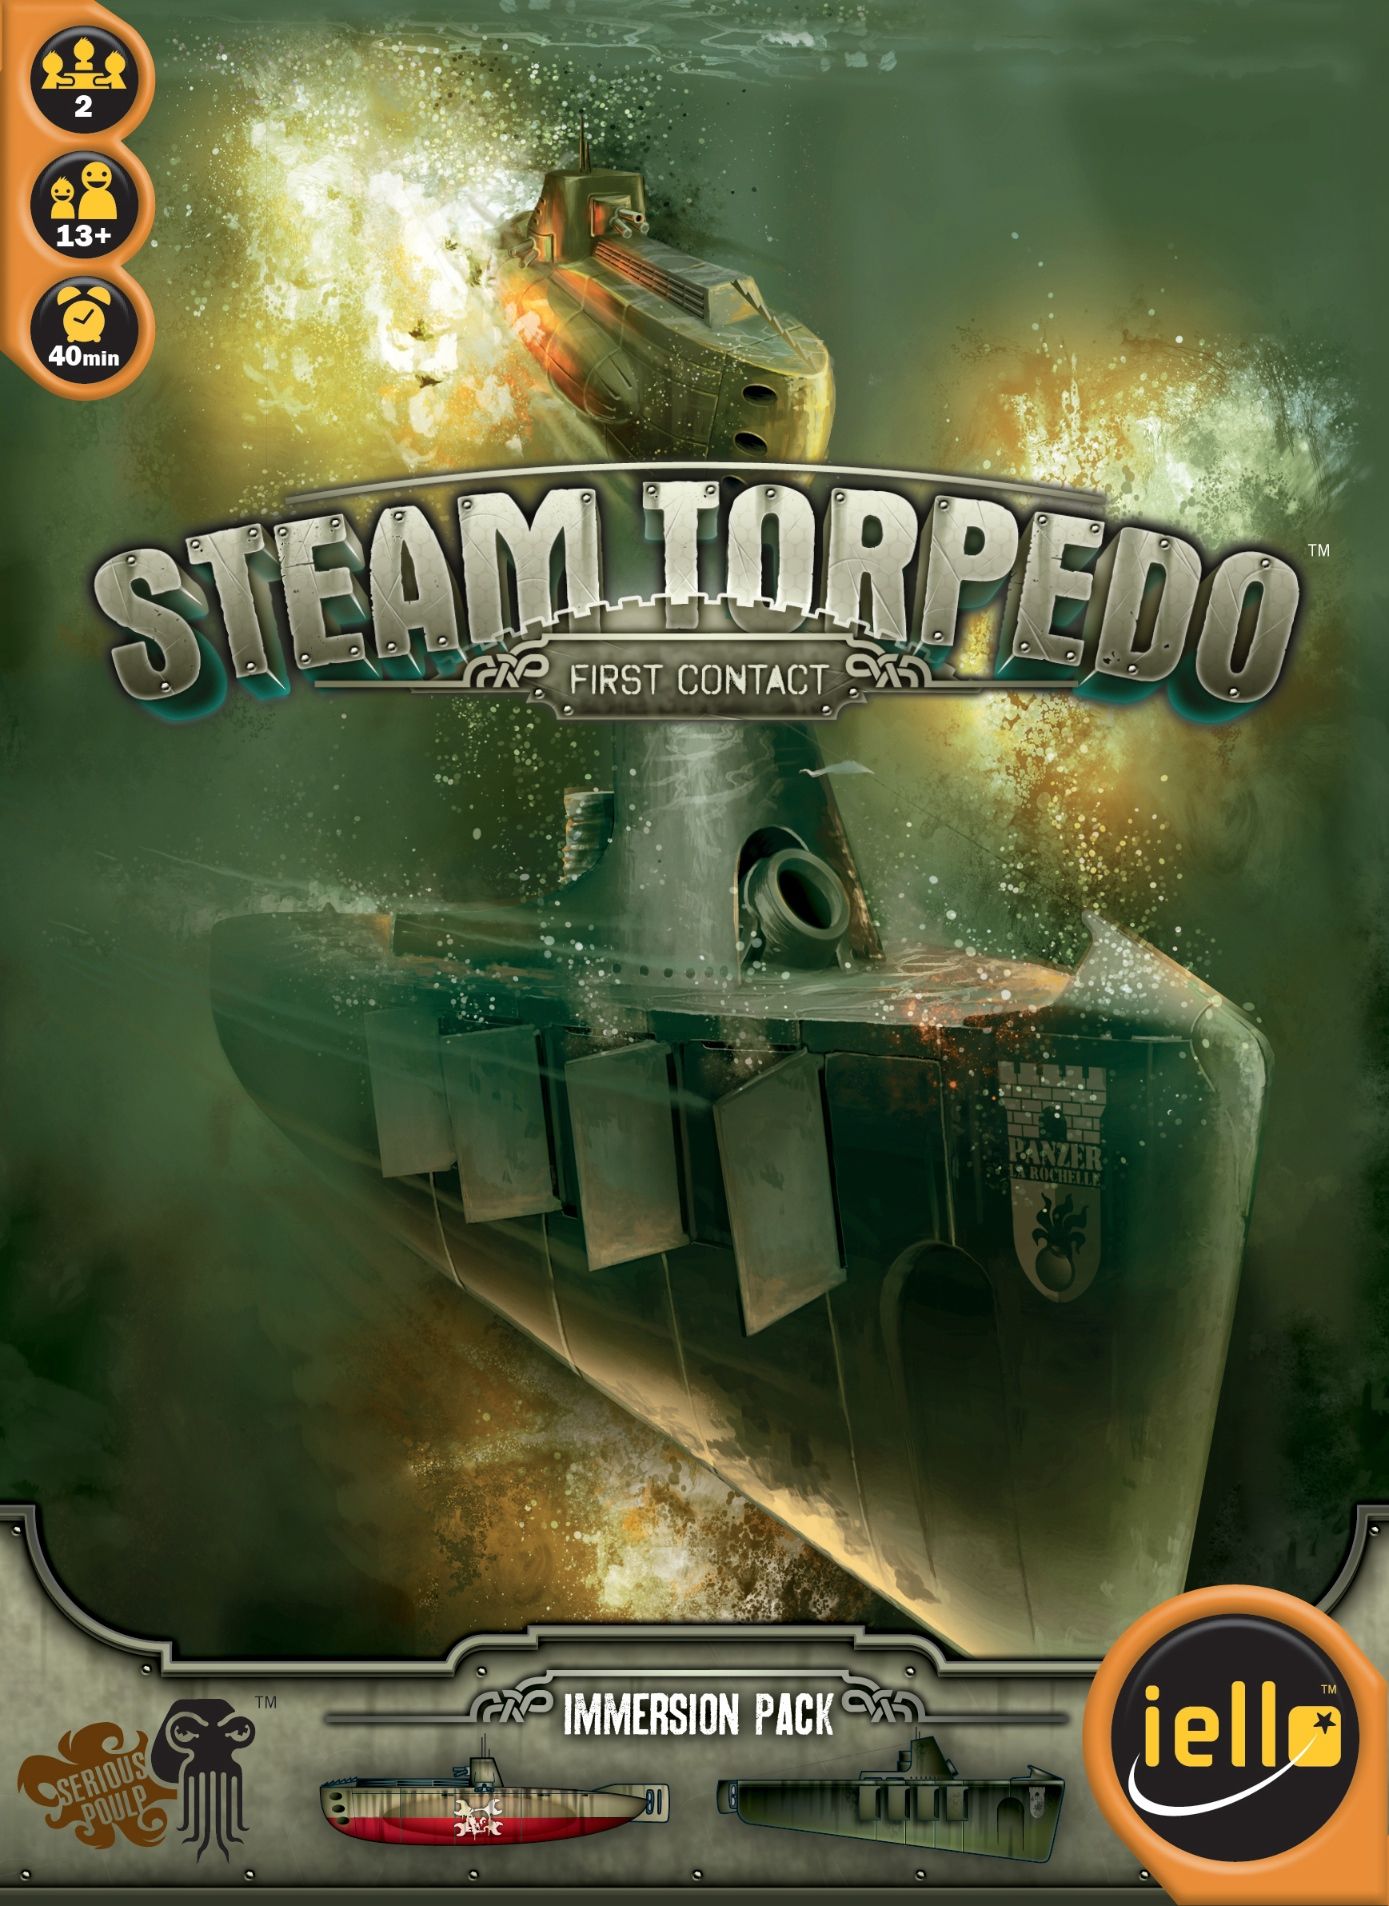 Steam torpedo premier contact